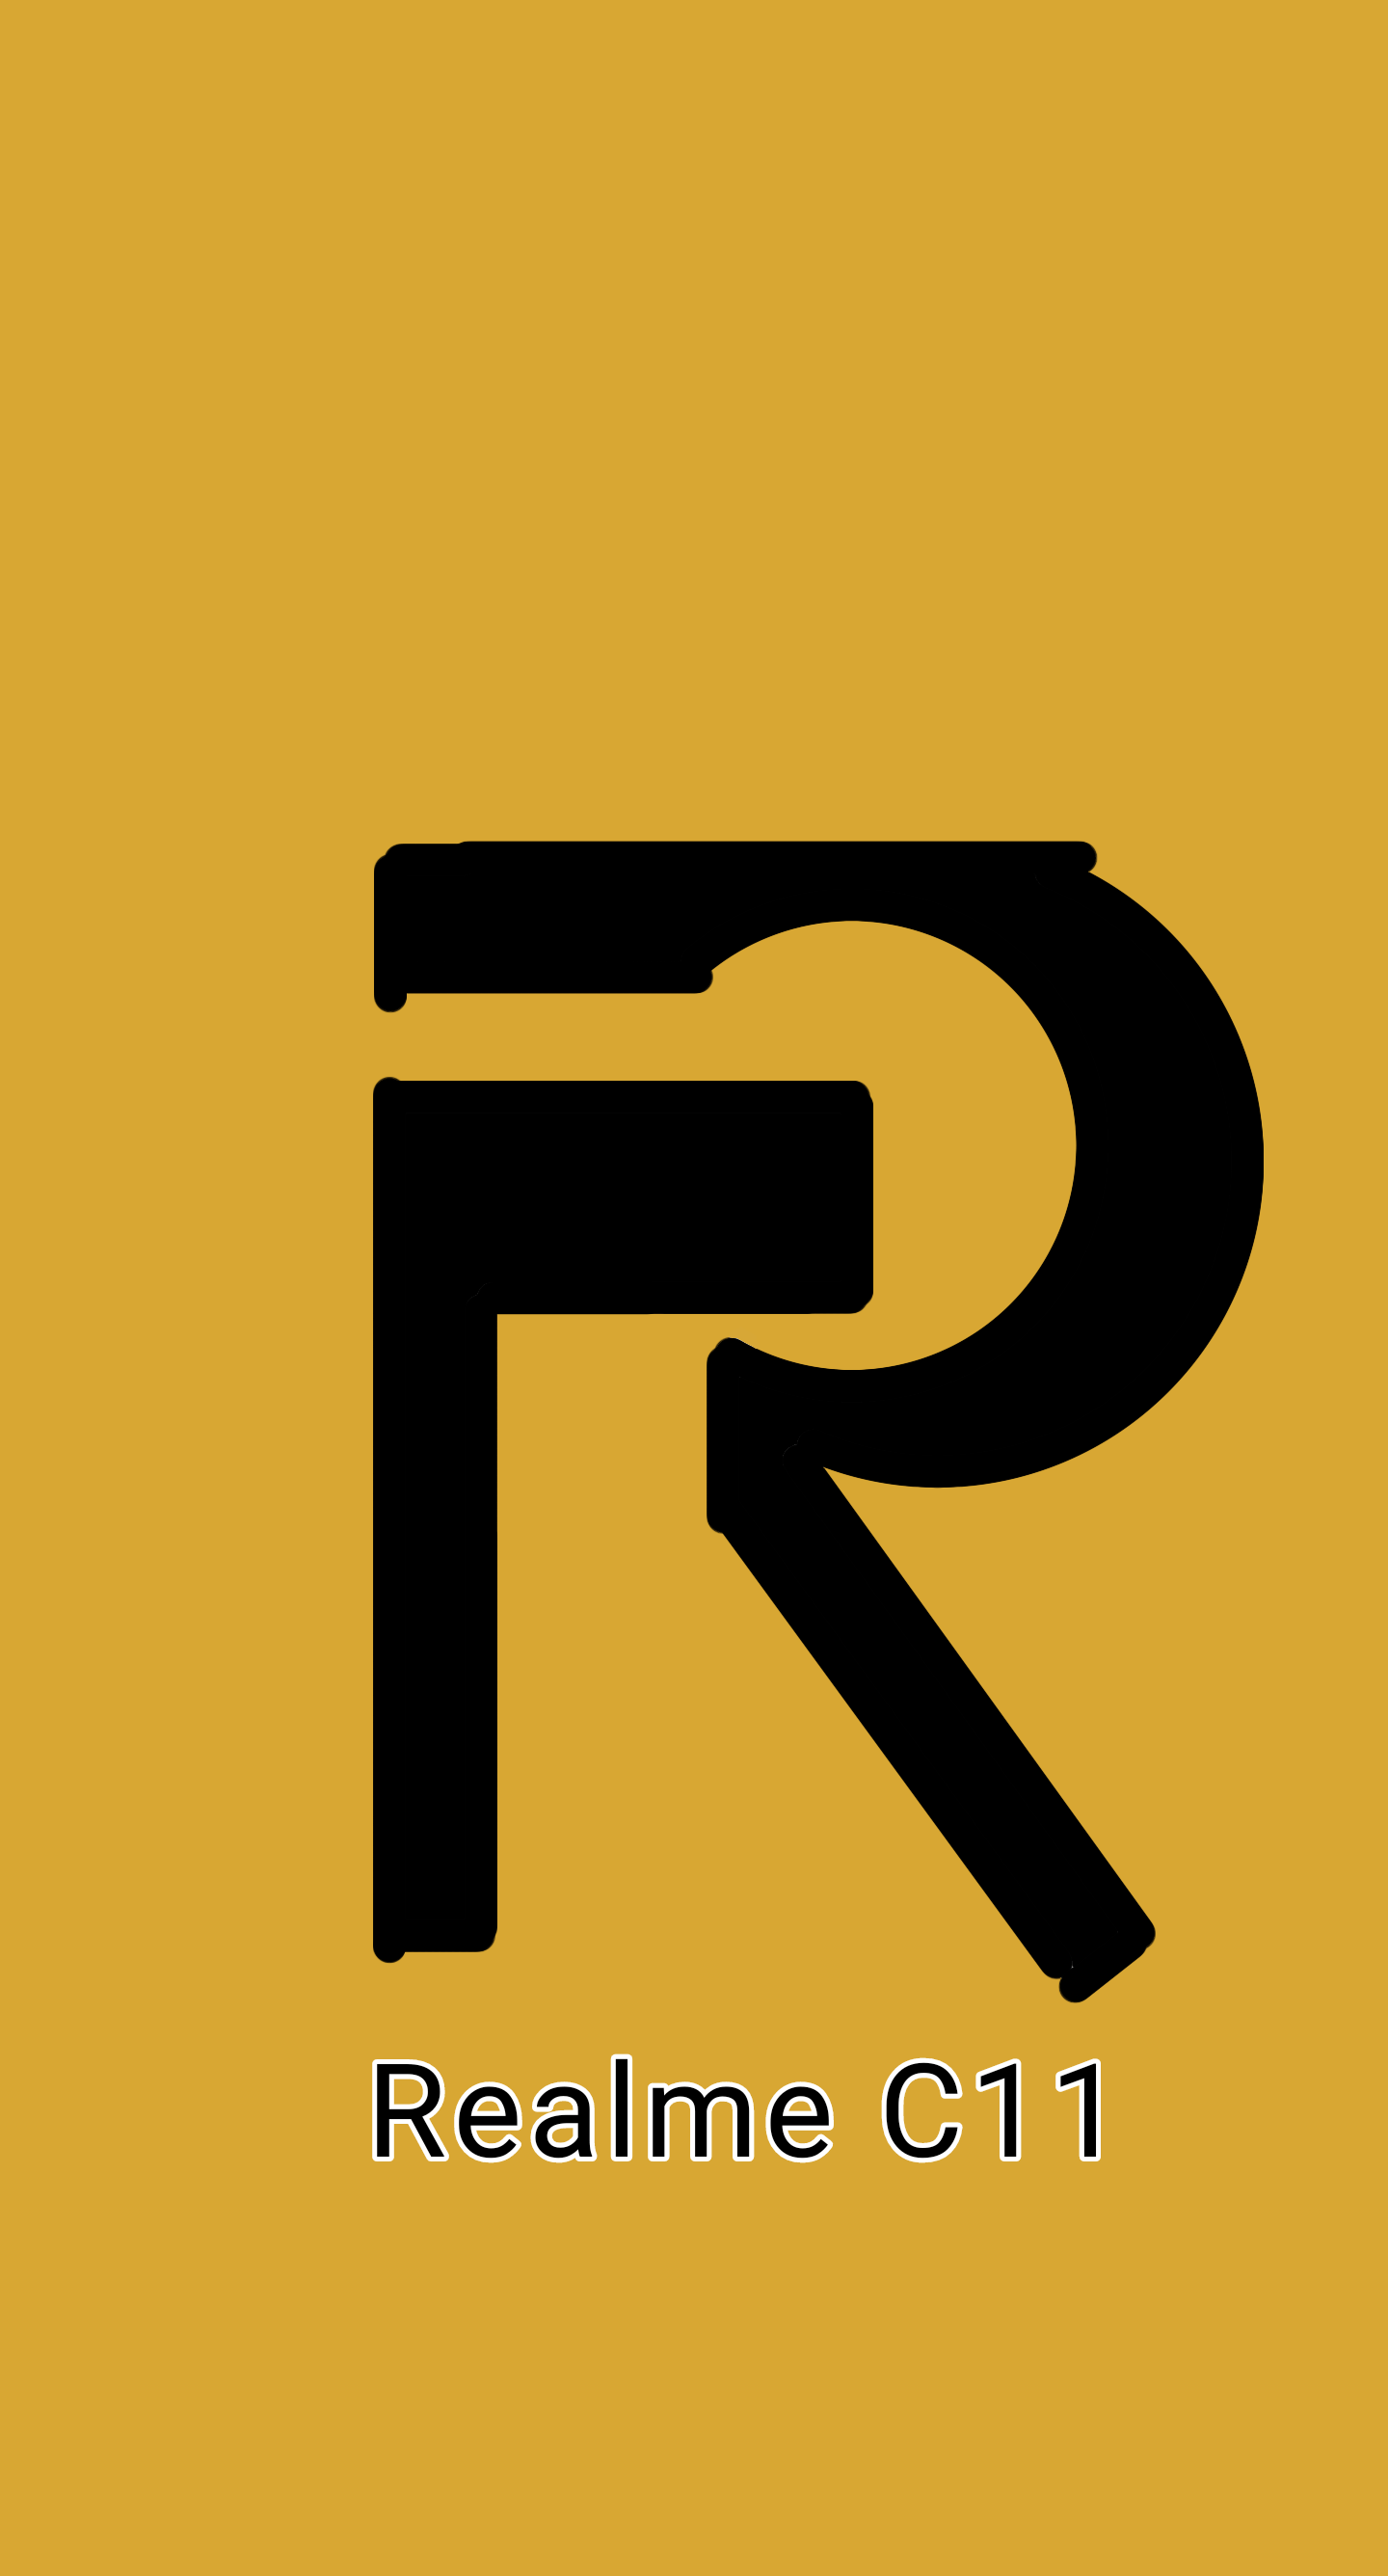 realme Logo - Realme C11 logo (My drawing) : r